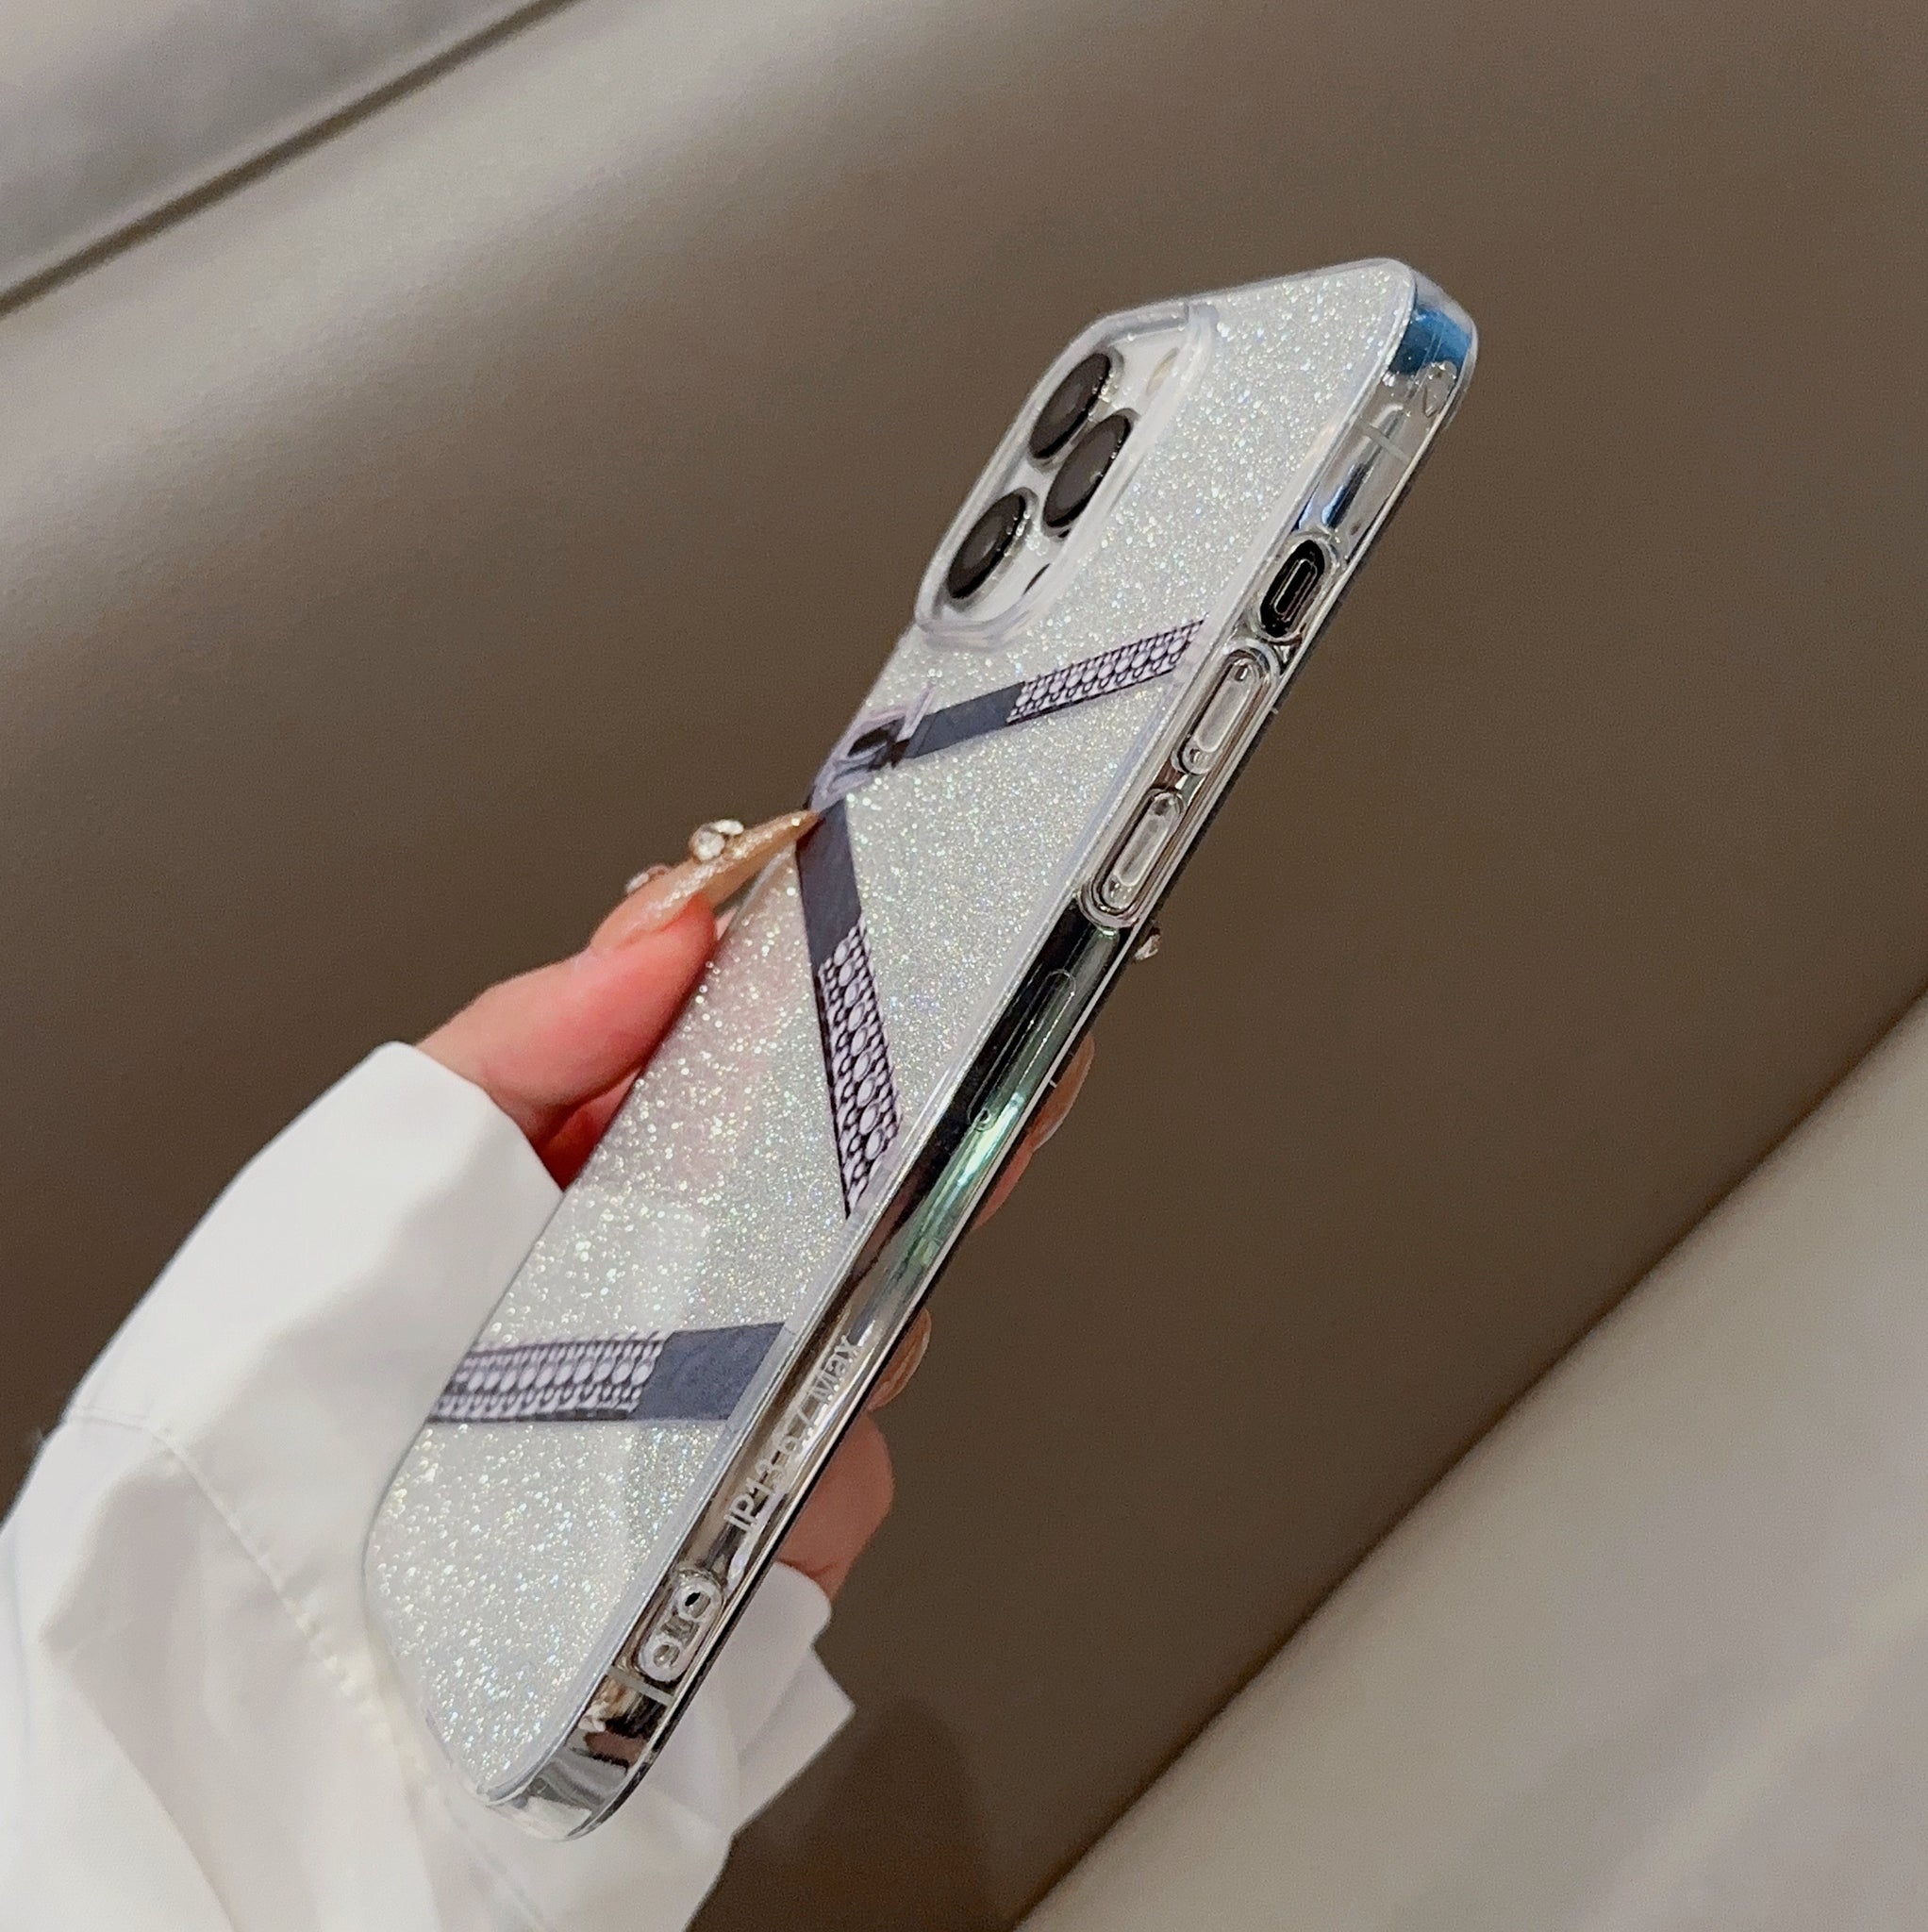 Cute Zipper Pattern Glitter iPhone Cases for Series 14 13 12 11 X Xs XR Pro Max